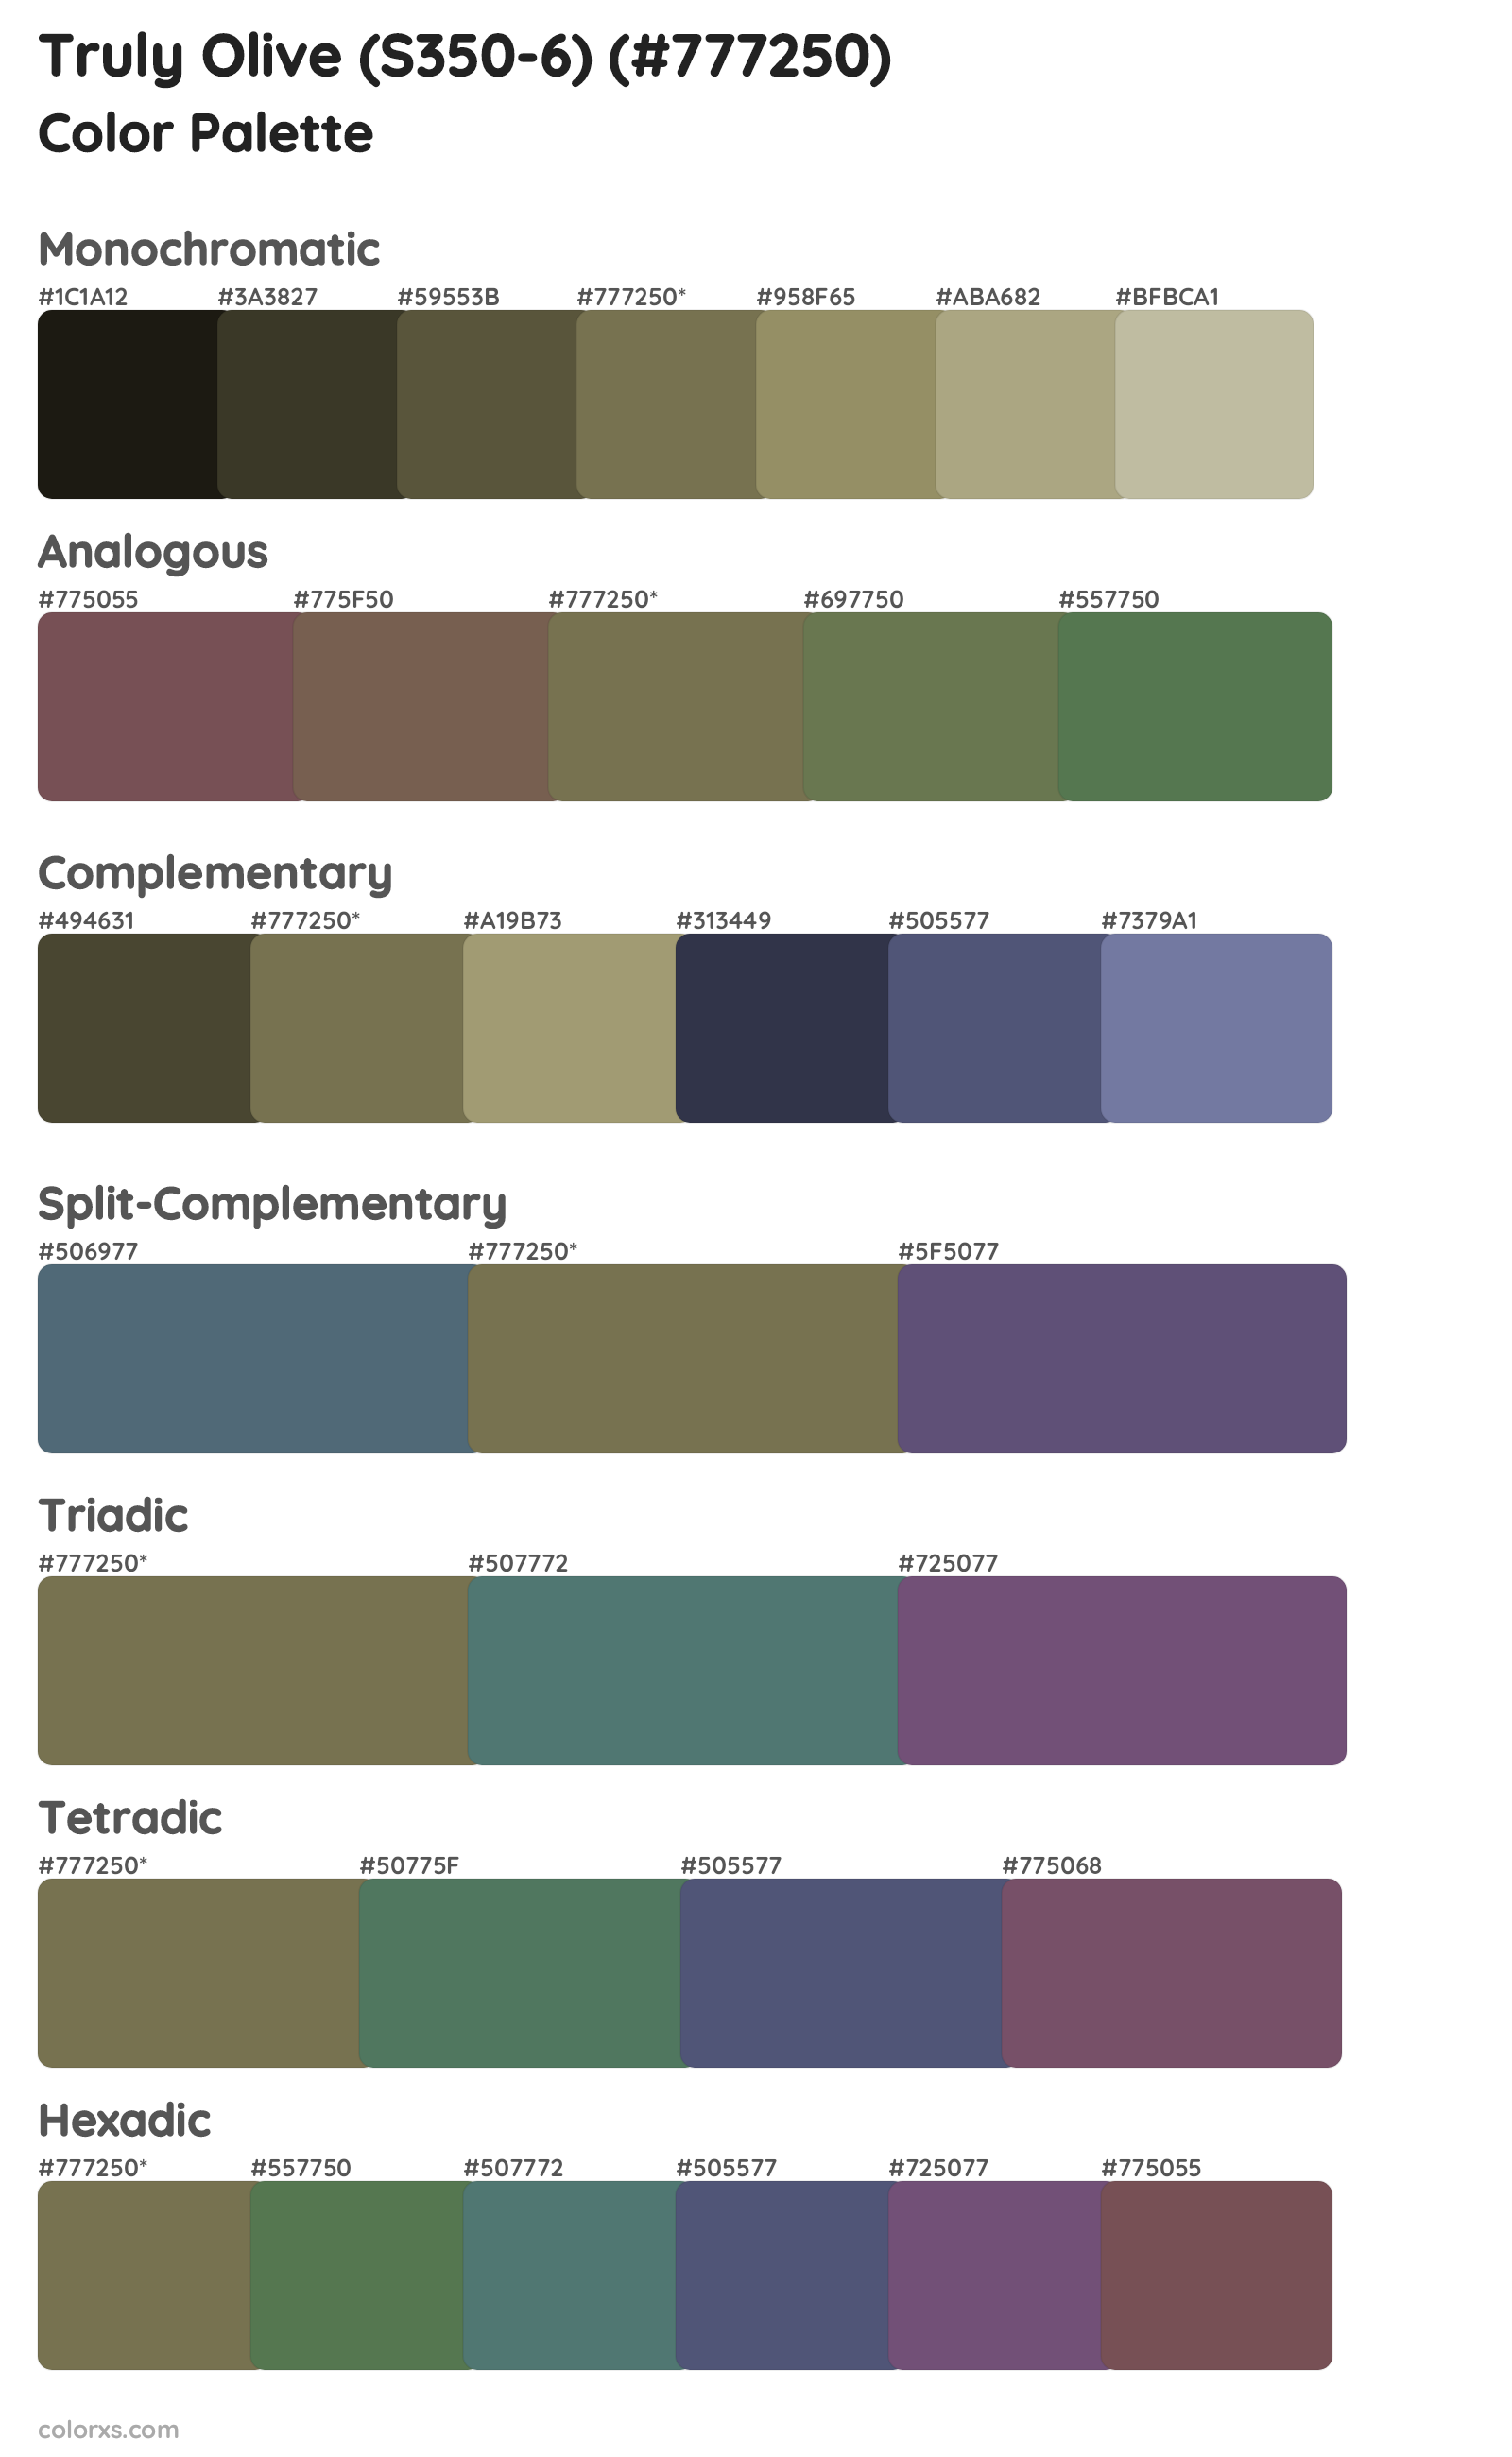 Truly Olive (S350-6) Color Scheme Palettes